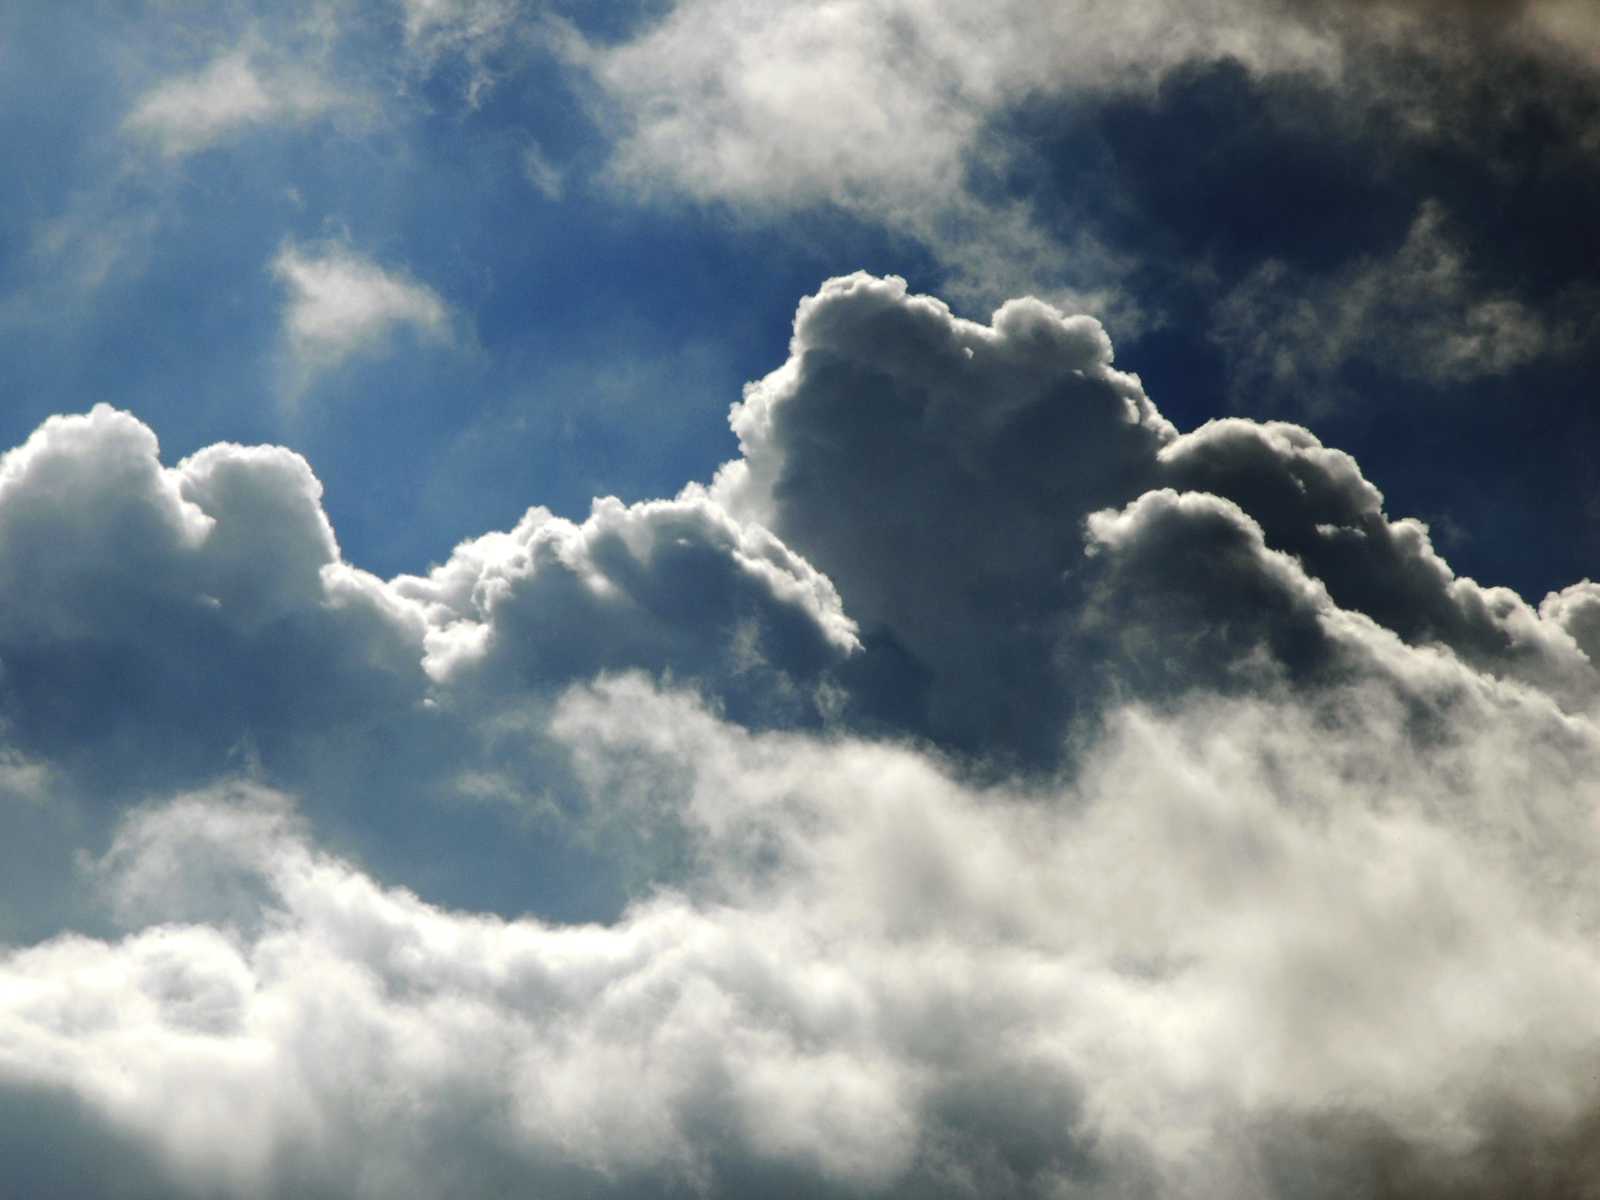 Rain cloud series (image 15 of 15) photo